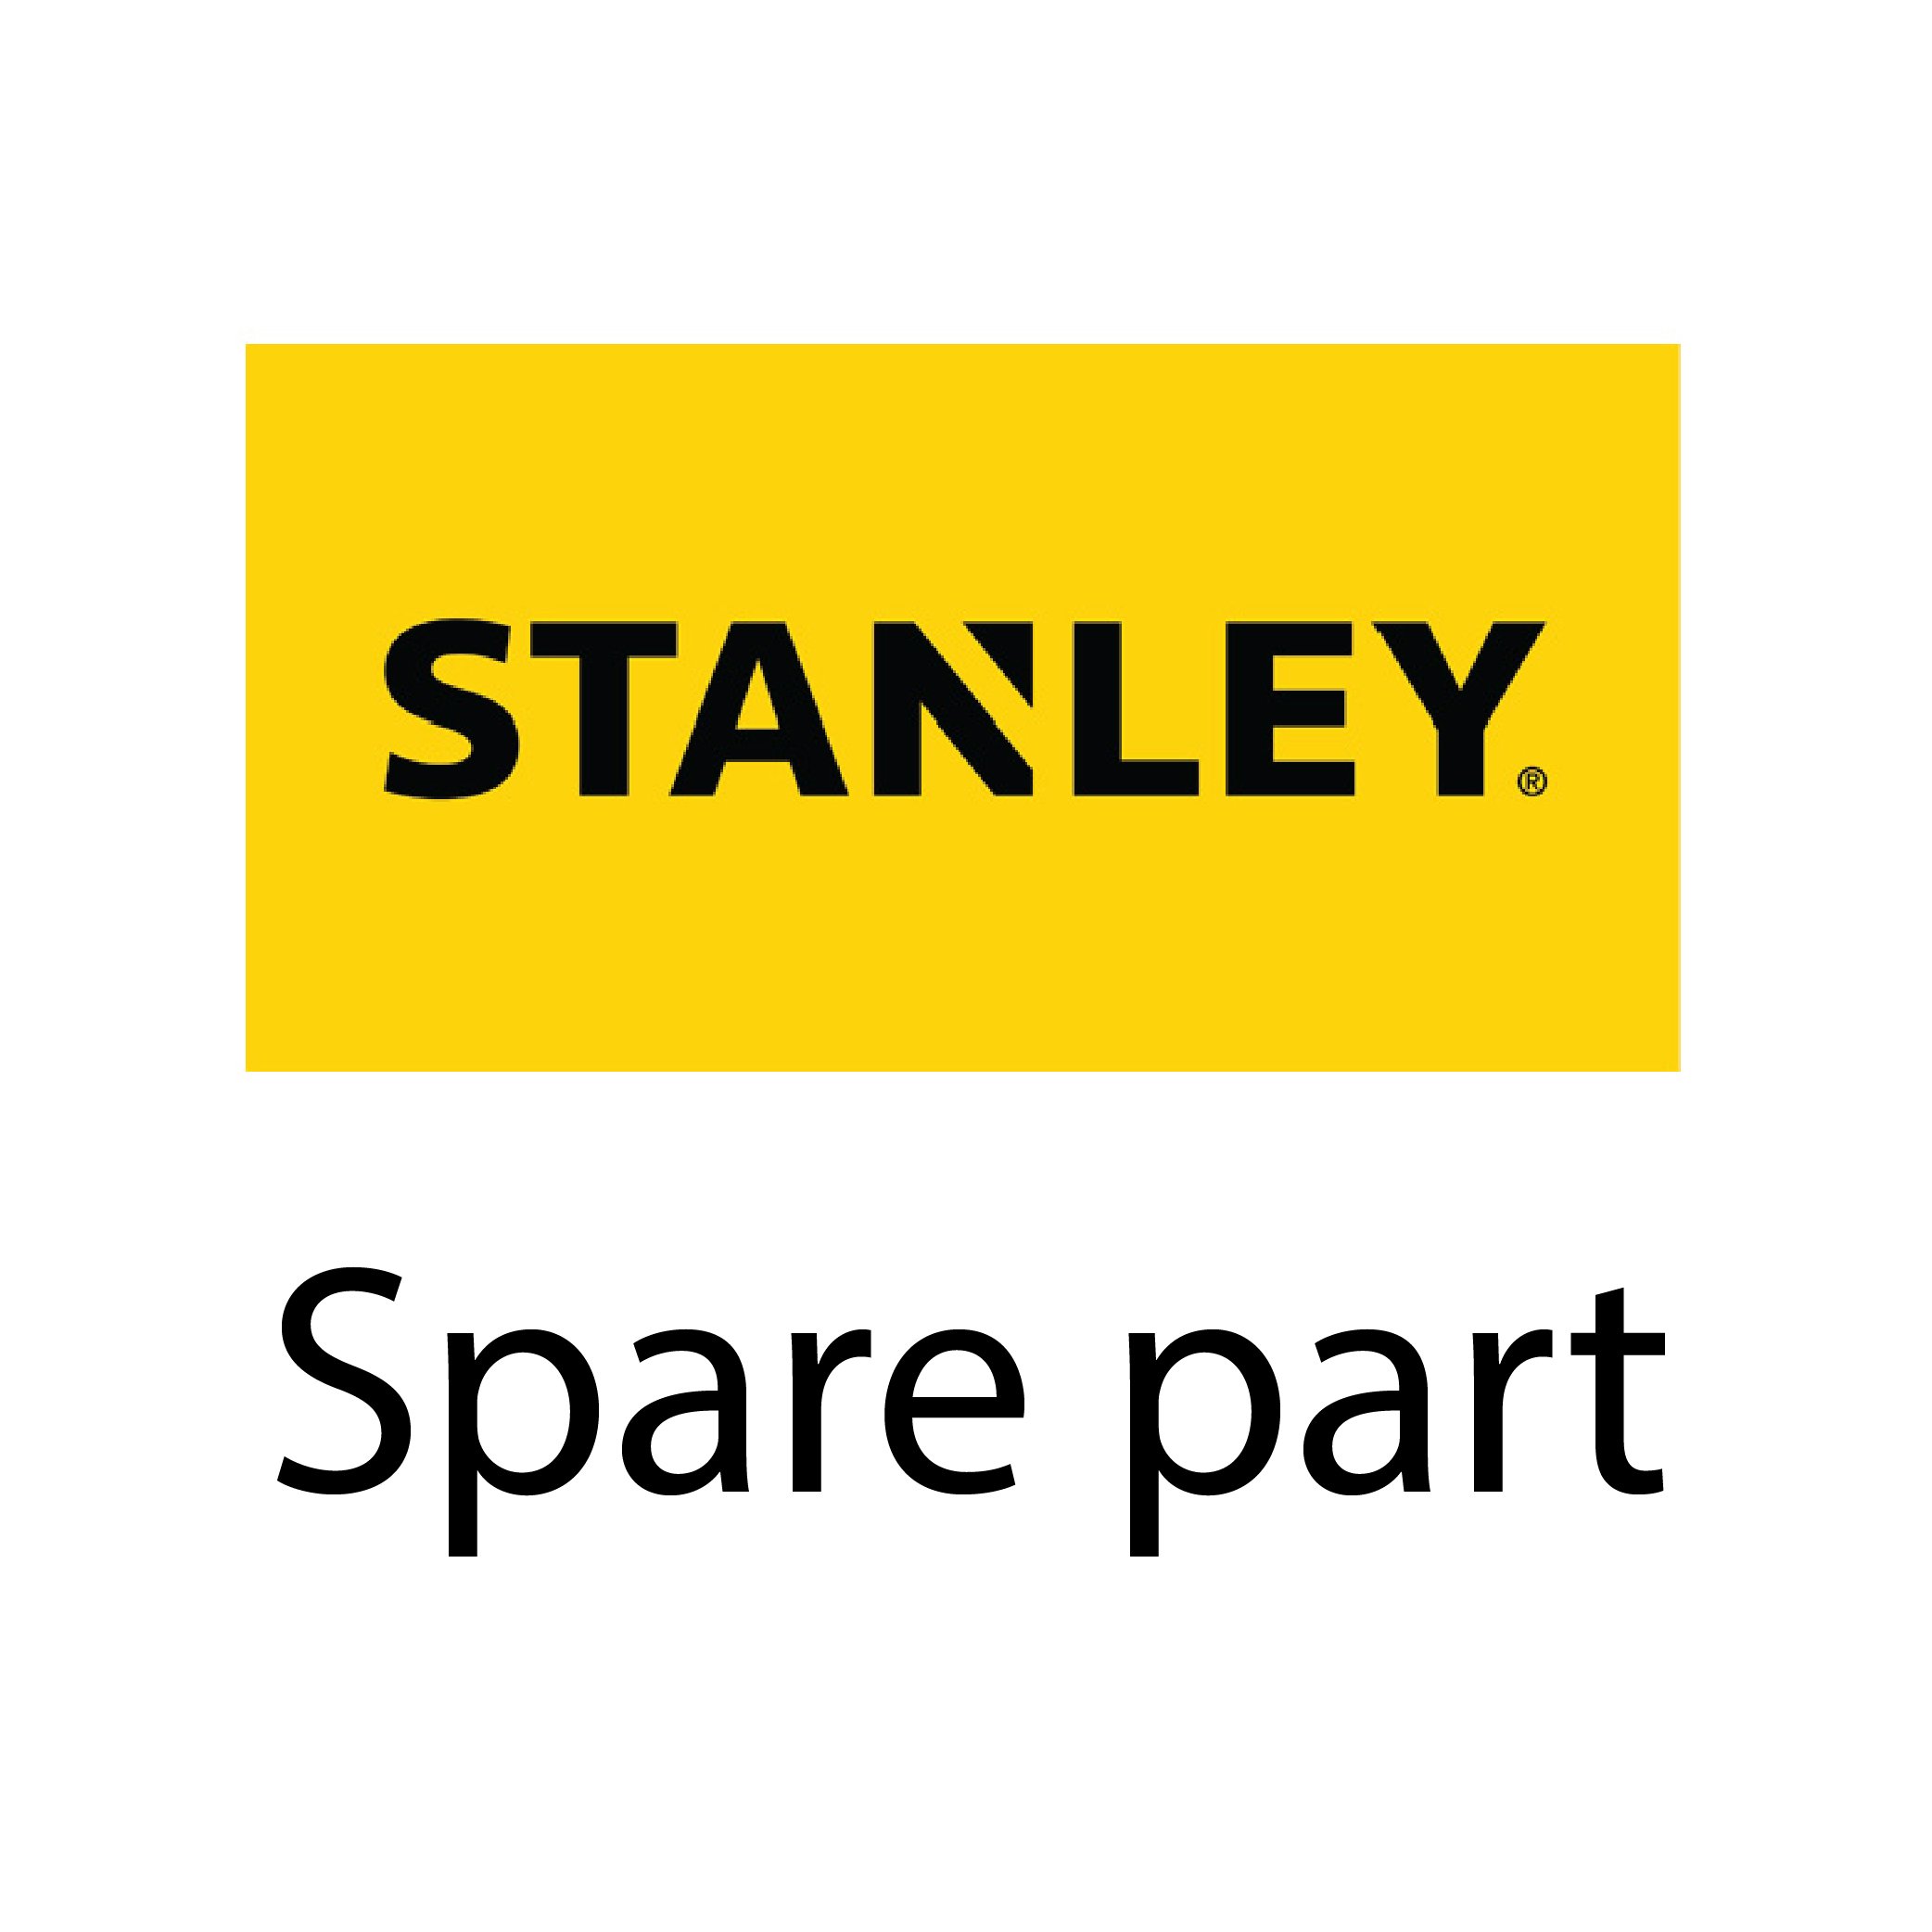 SKI - สกี จำหน่ายสินค้าหลากหลาย และคุณภาพดี | STANLEY #1004526-27 ทุ่น STEL630